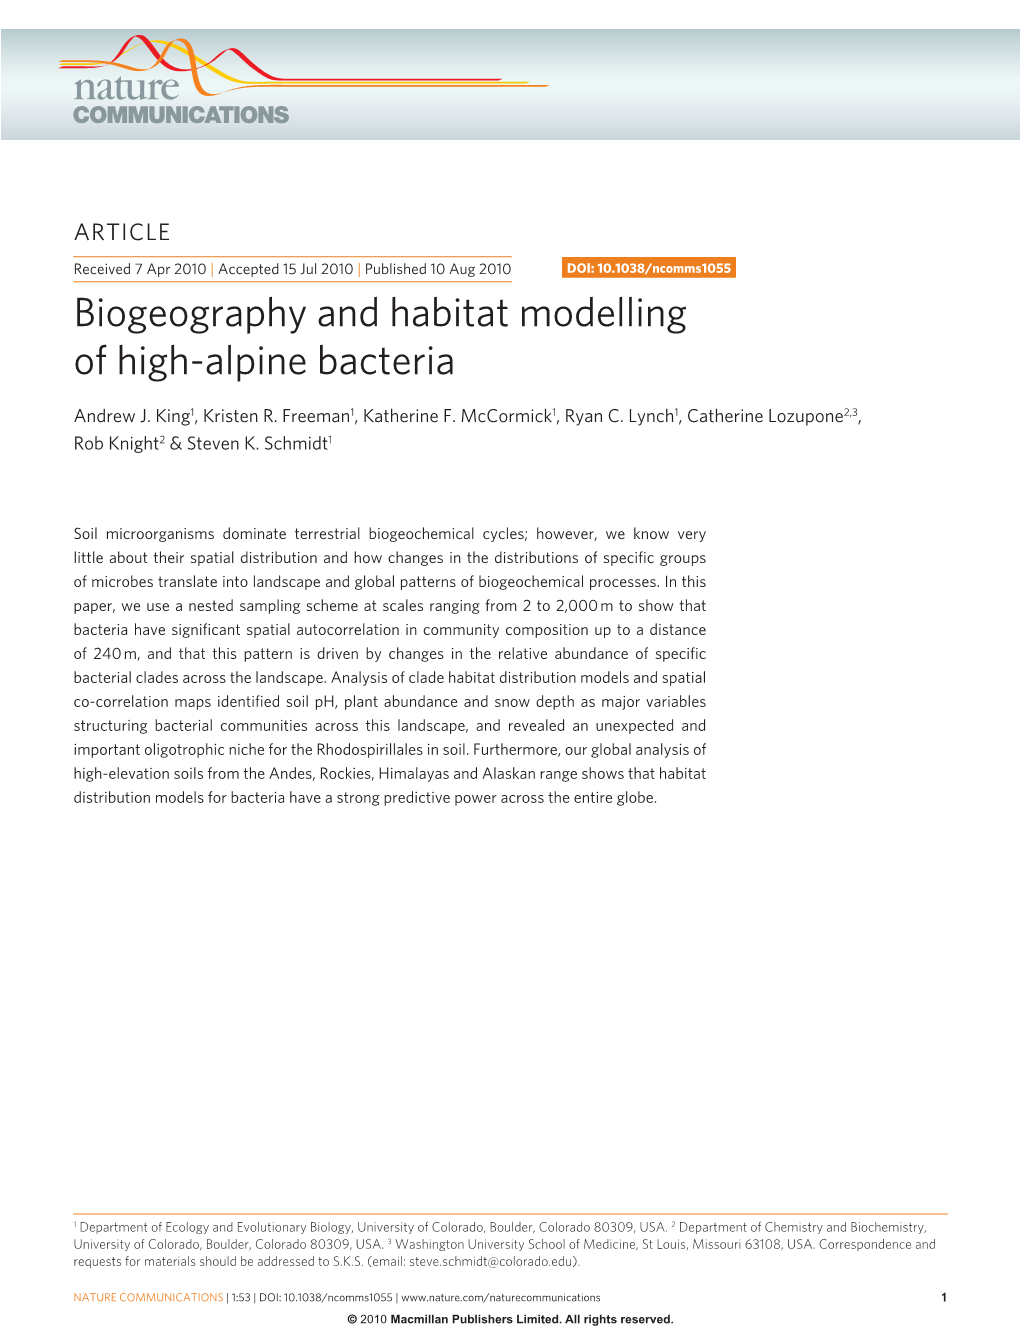 Biogeography and Habitat Modelling of High-Alpine Bacteria